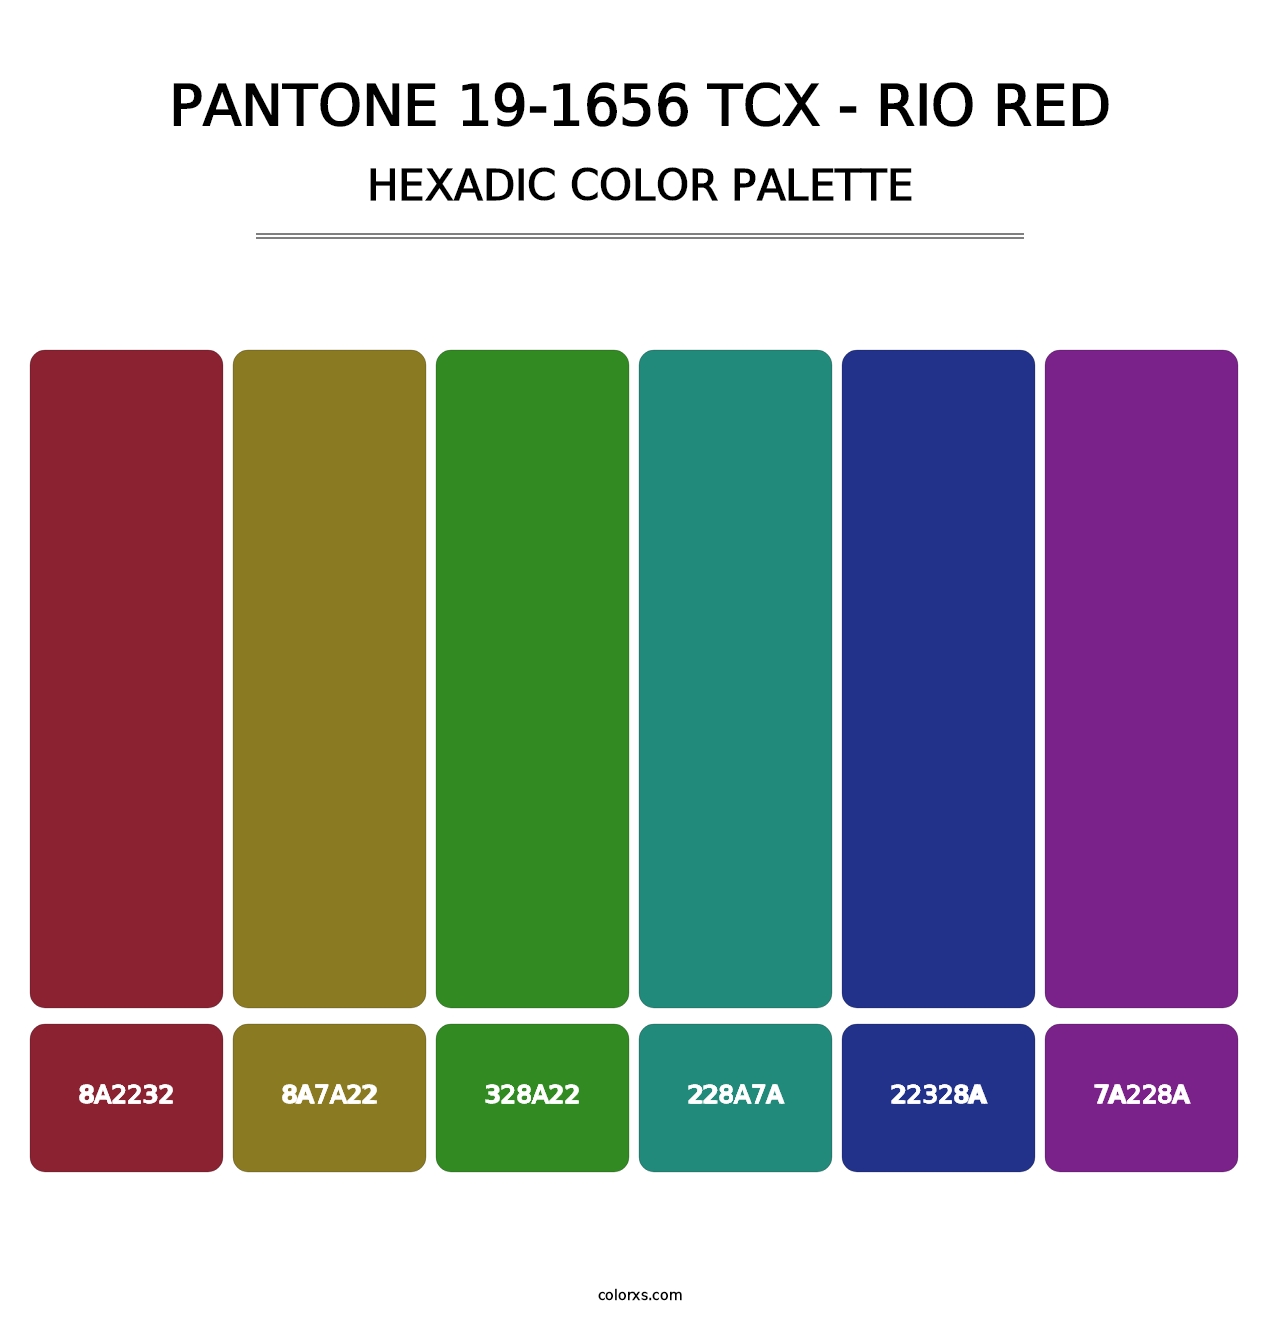 PANTONE 19-1656 TCX - Rio Red - Hexadic Color Palette